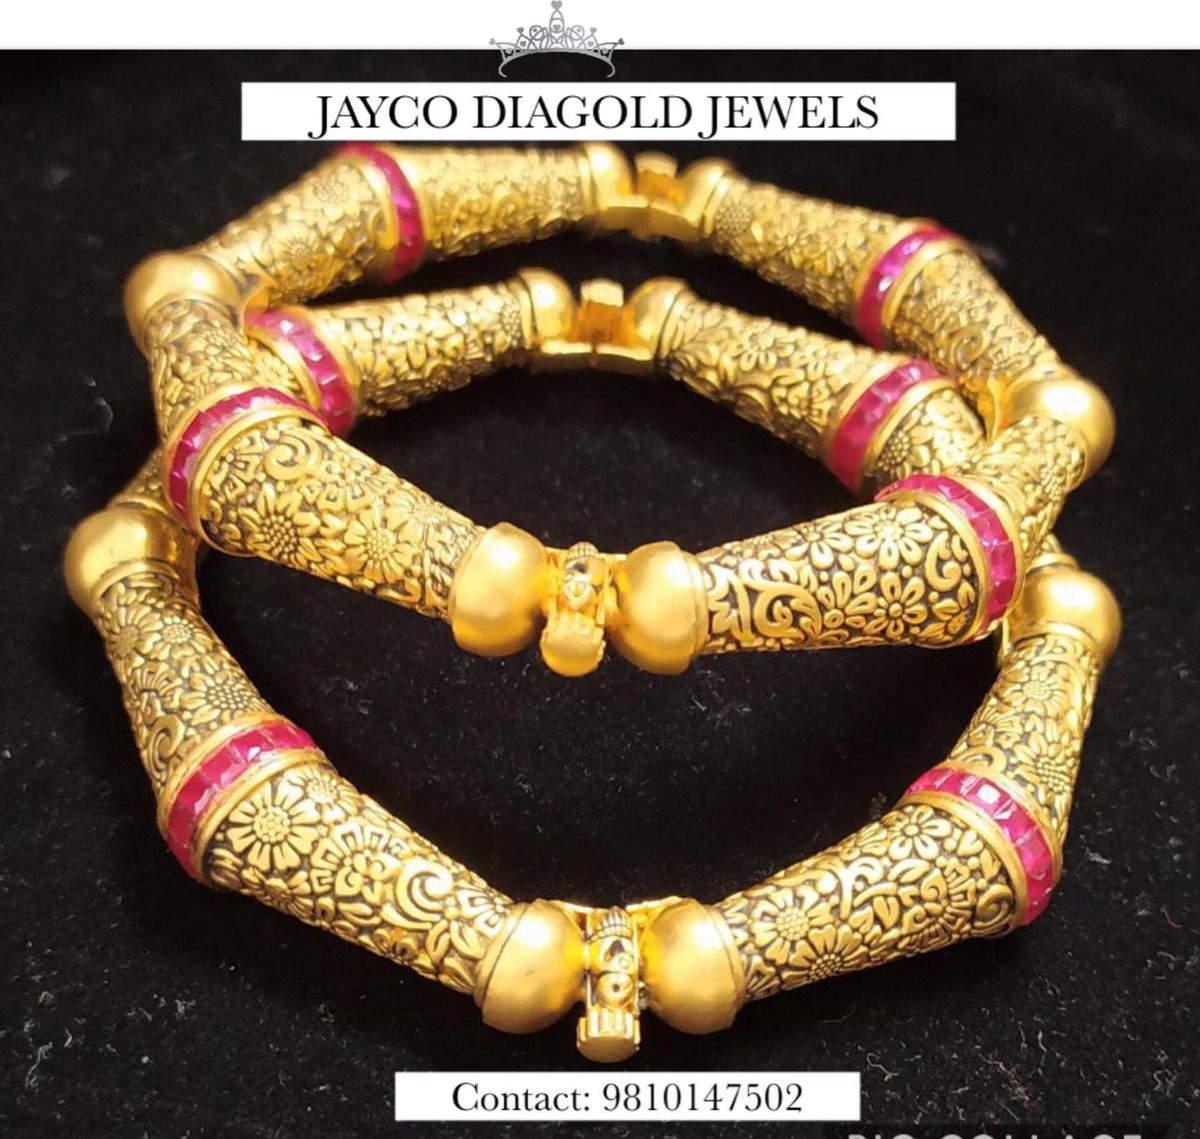 Gold caricatures and intricate designs 😻 
GOLD KANGAN 
Jayco Diagold Jewels 💎 
Contact: 9810147502

#kangan #indianjewellery #jewelleryofinstagram #puregoldjewellery #bangles 
#indianweddingjewellery